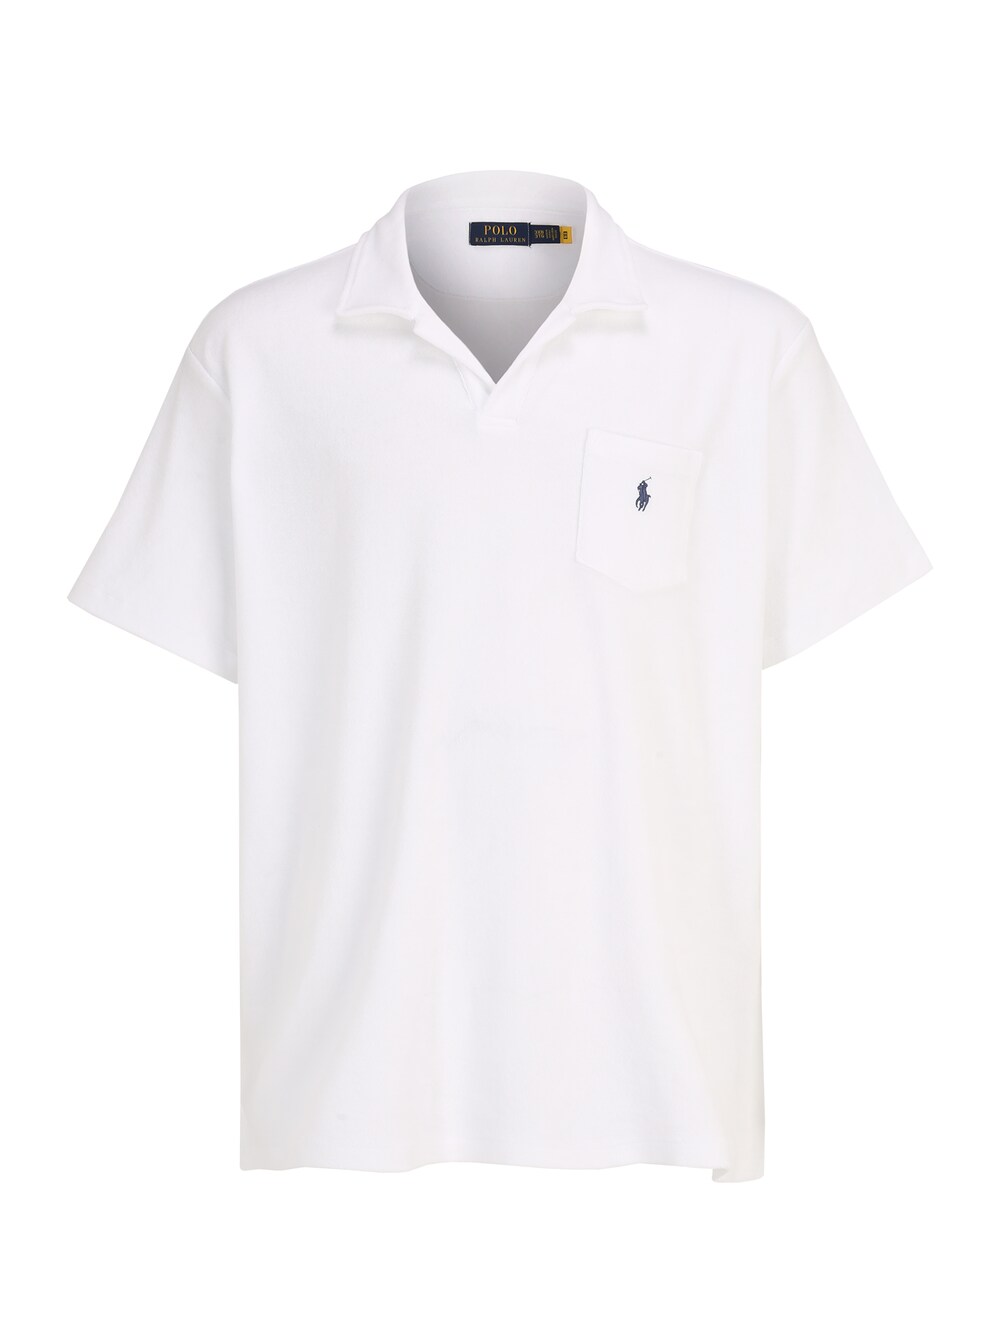 Футболка Polo Ralph Lauren Big & Tall, белый рубашка polo ralph lauren big